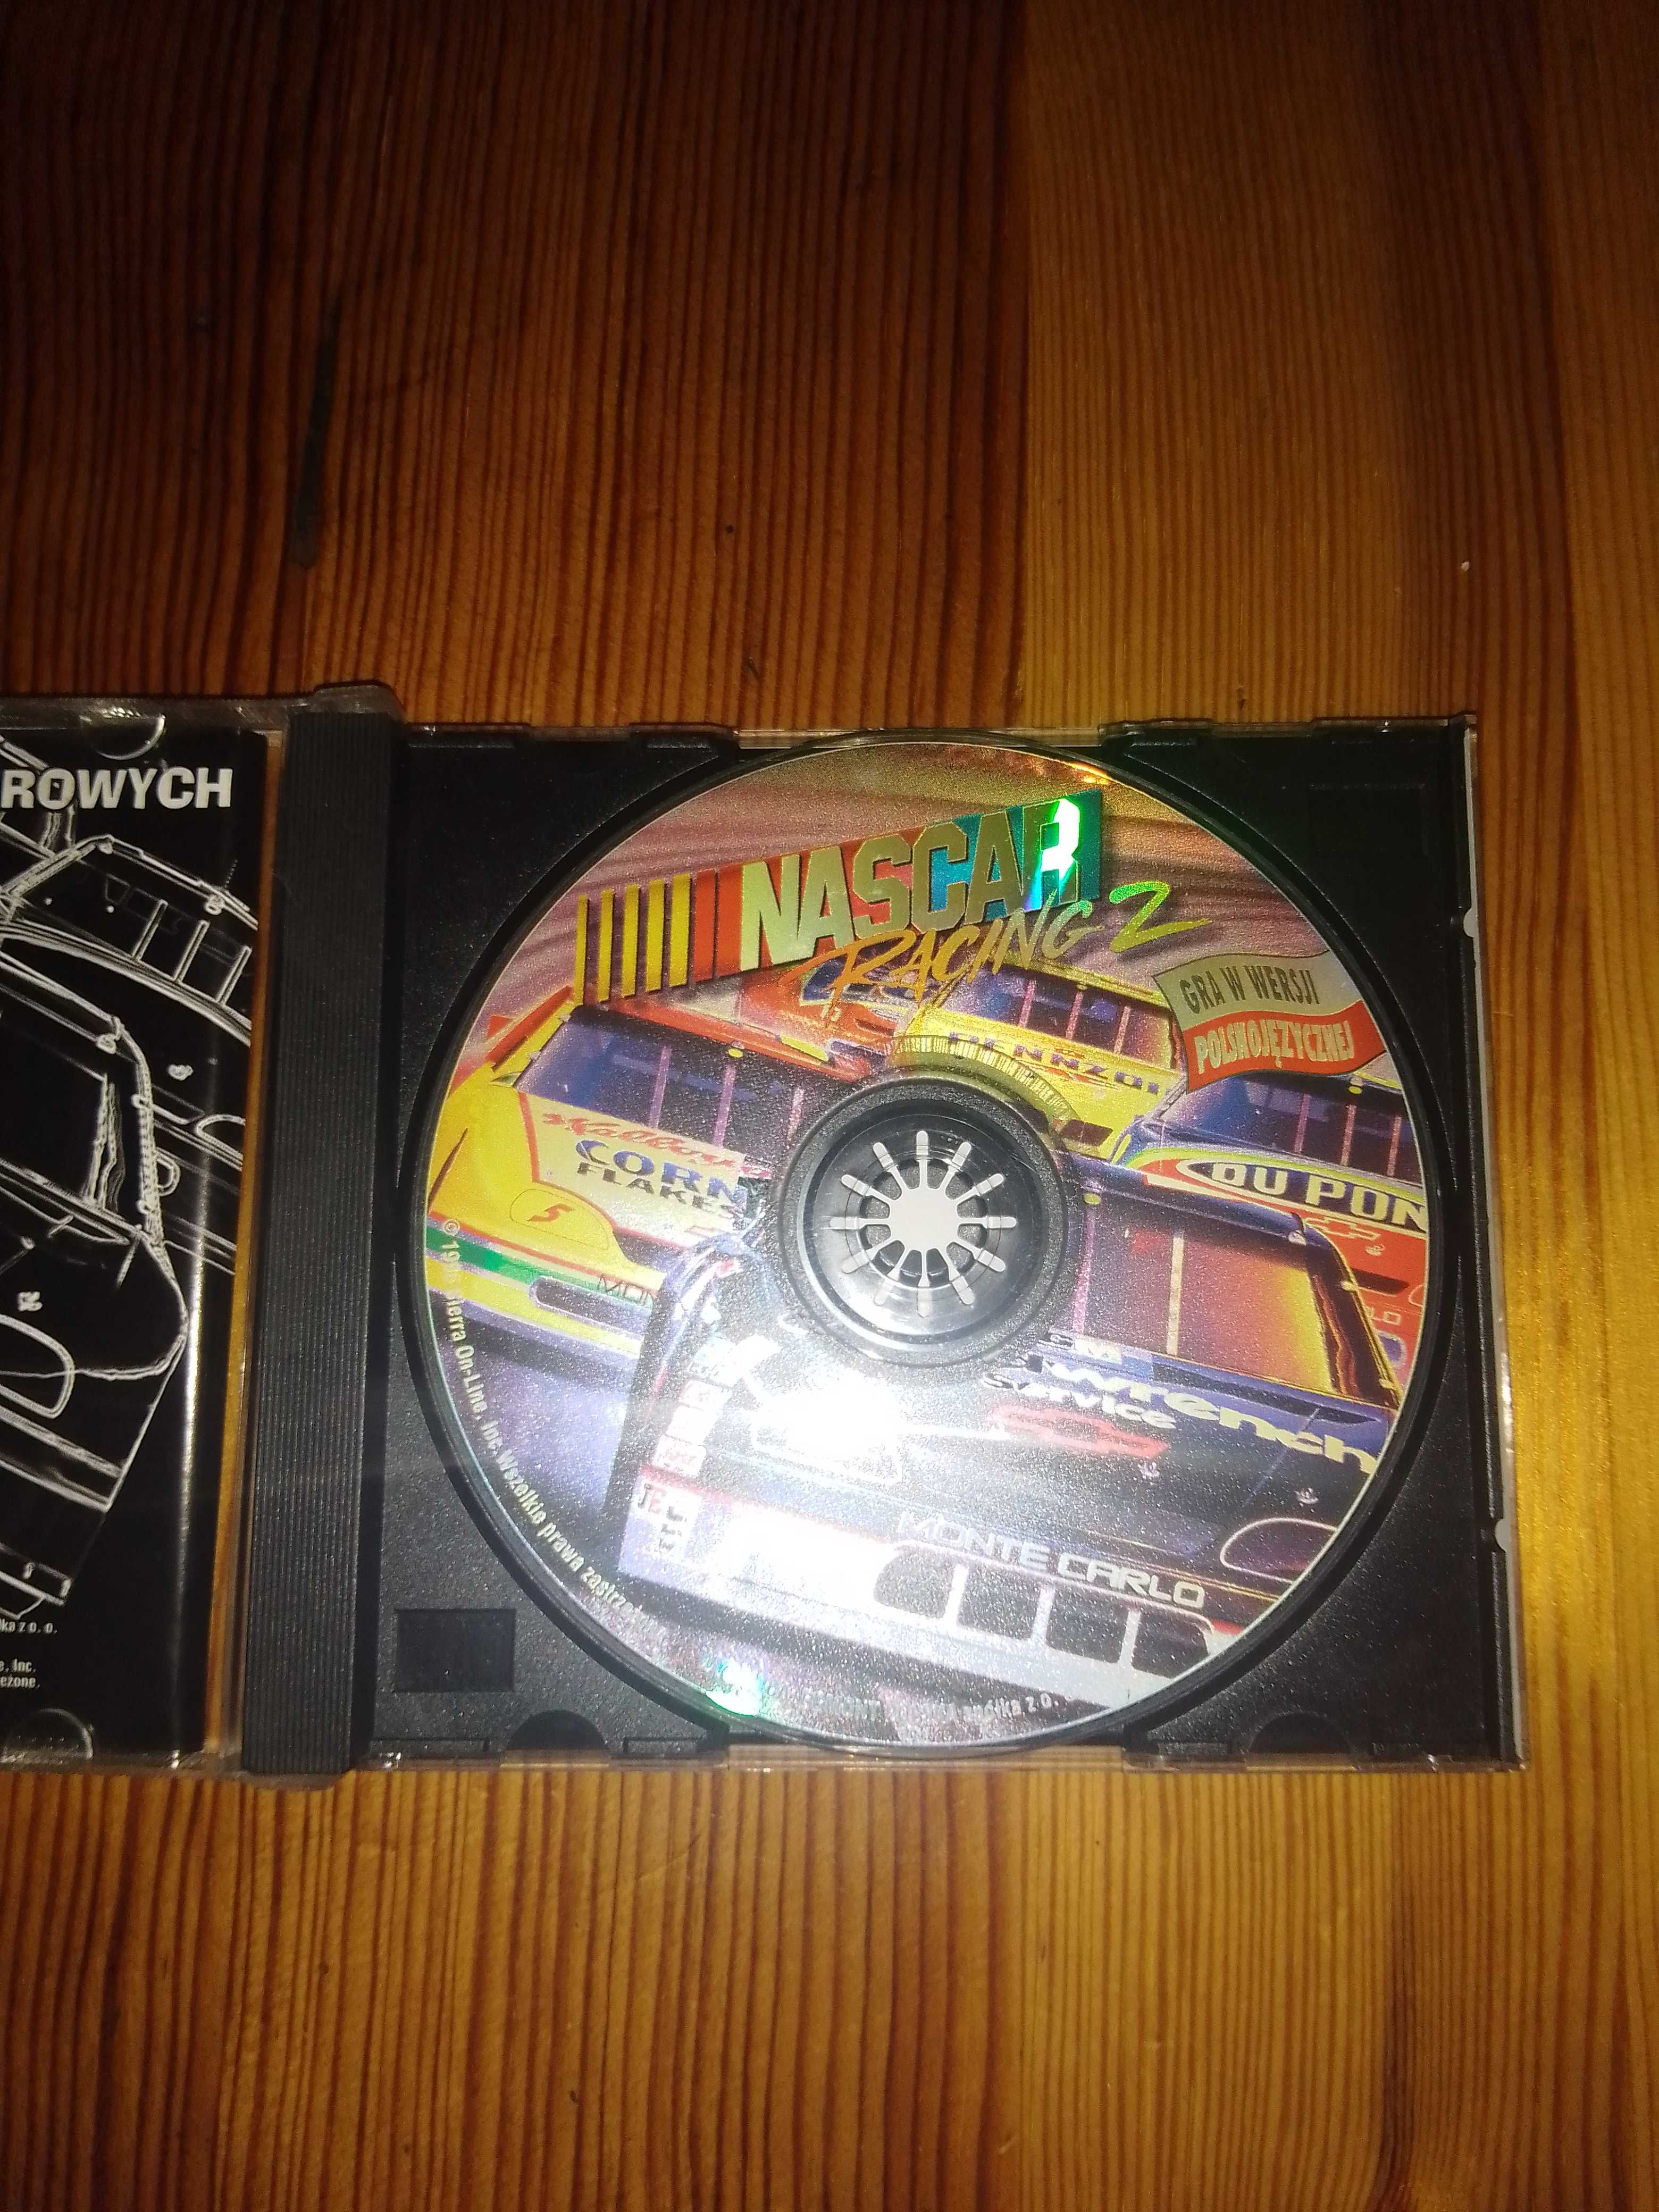 Gra PC CD NASCAR racing 2 kolekcjonerska